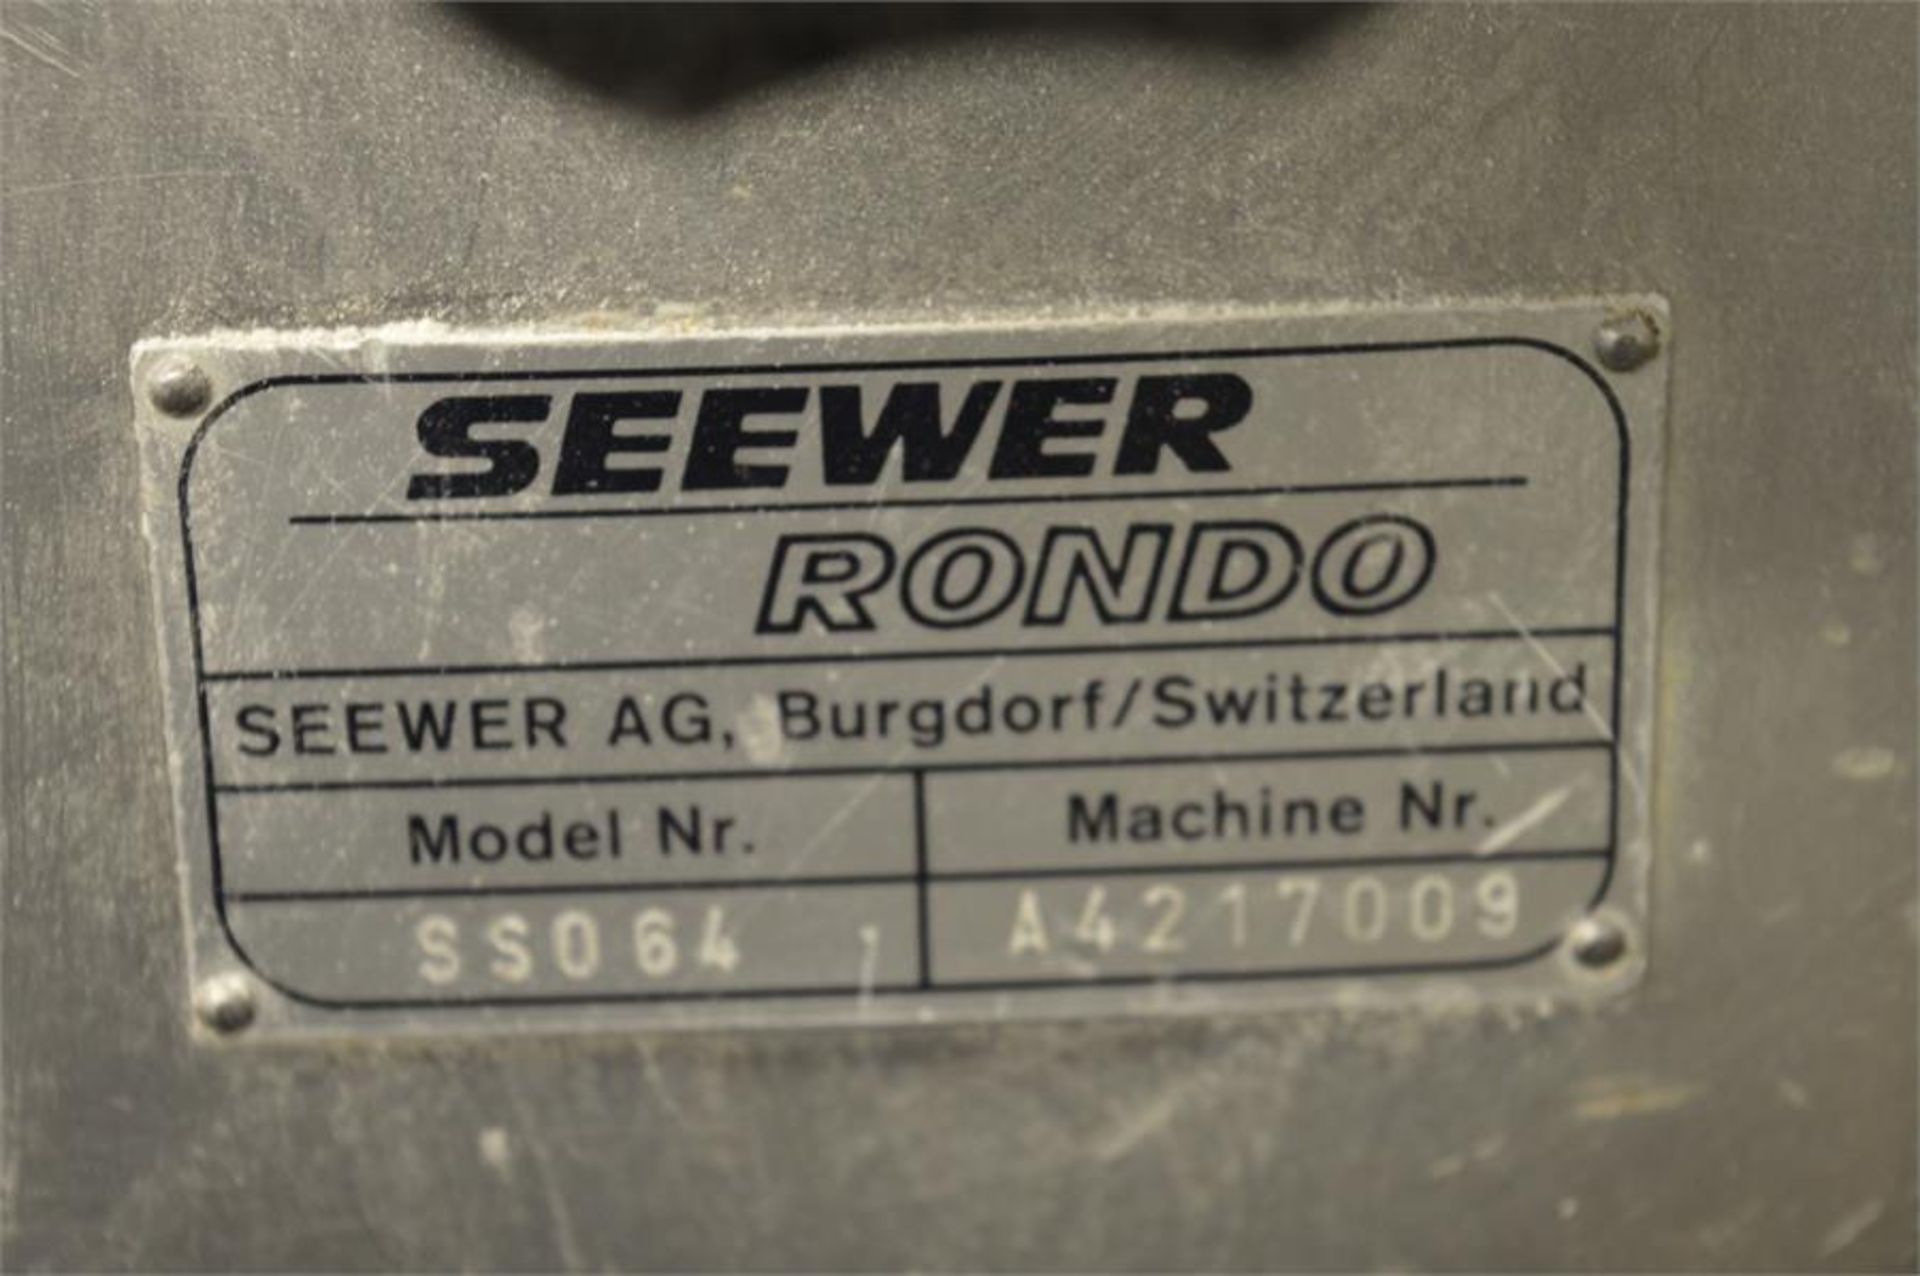 Seewer Rondo, Model SS064, pastry break, Serial No. A4217009, overall length: 3.3m, belt width: 60cm - Bild 4 aus 4